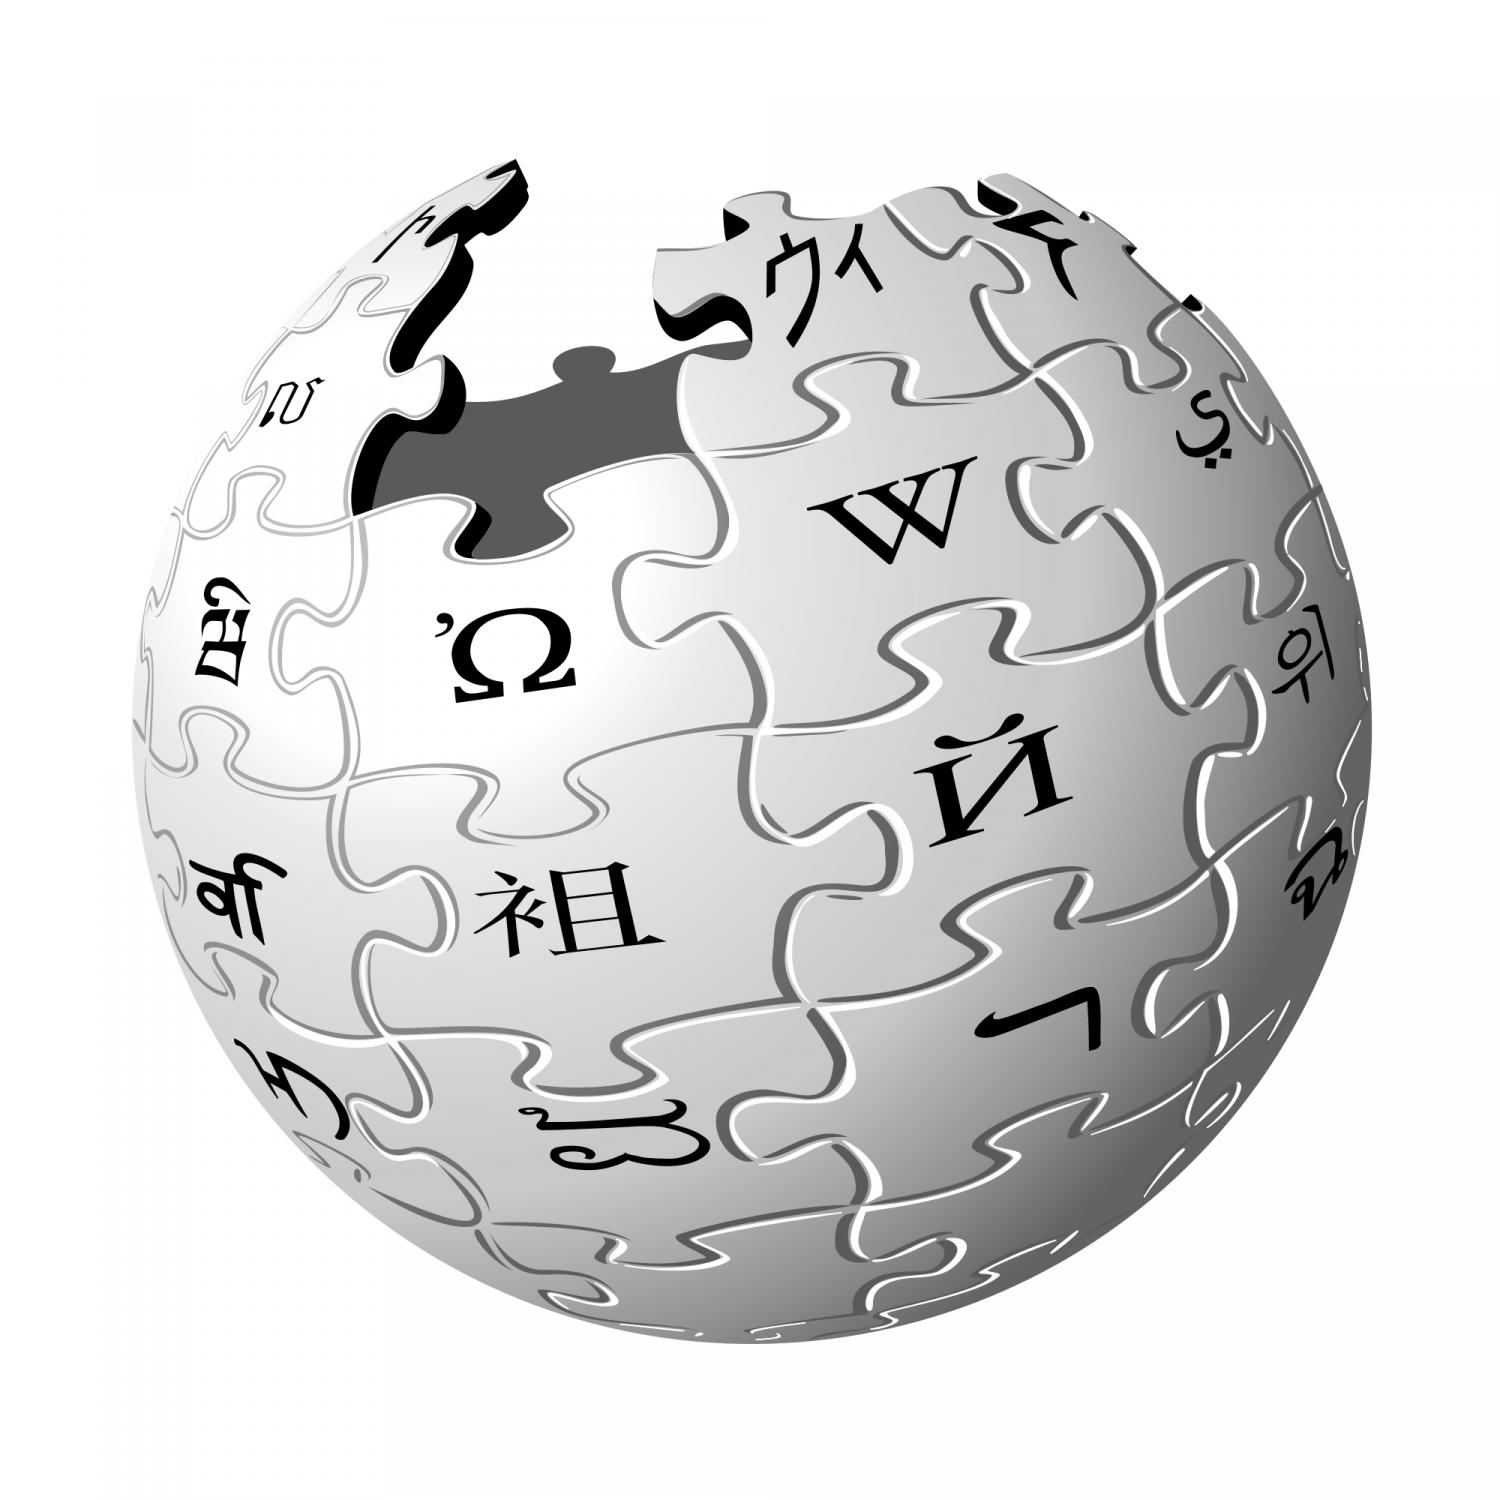 Wikipedia Logo White